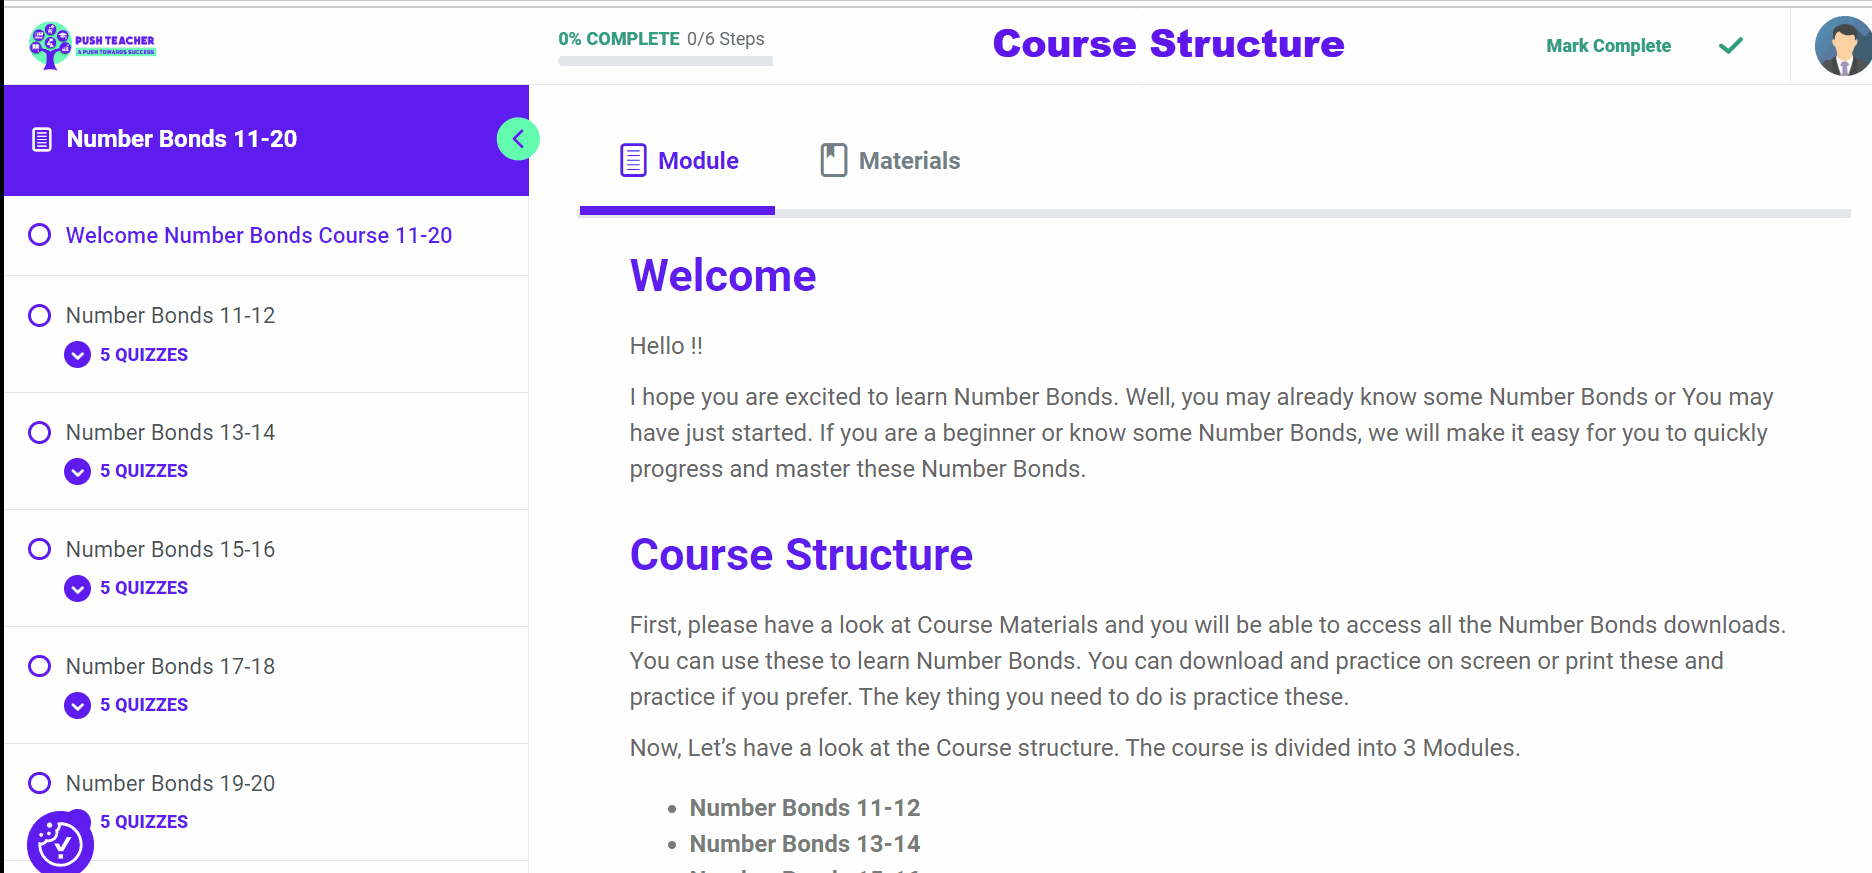 Number Bonds 11-20 Course Structure